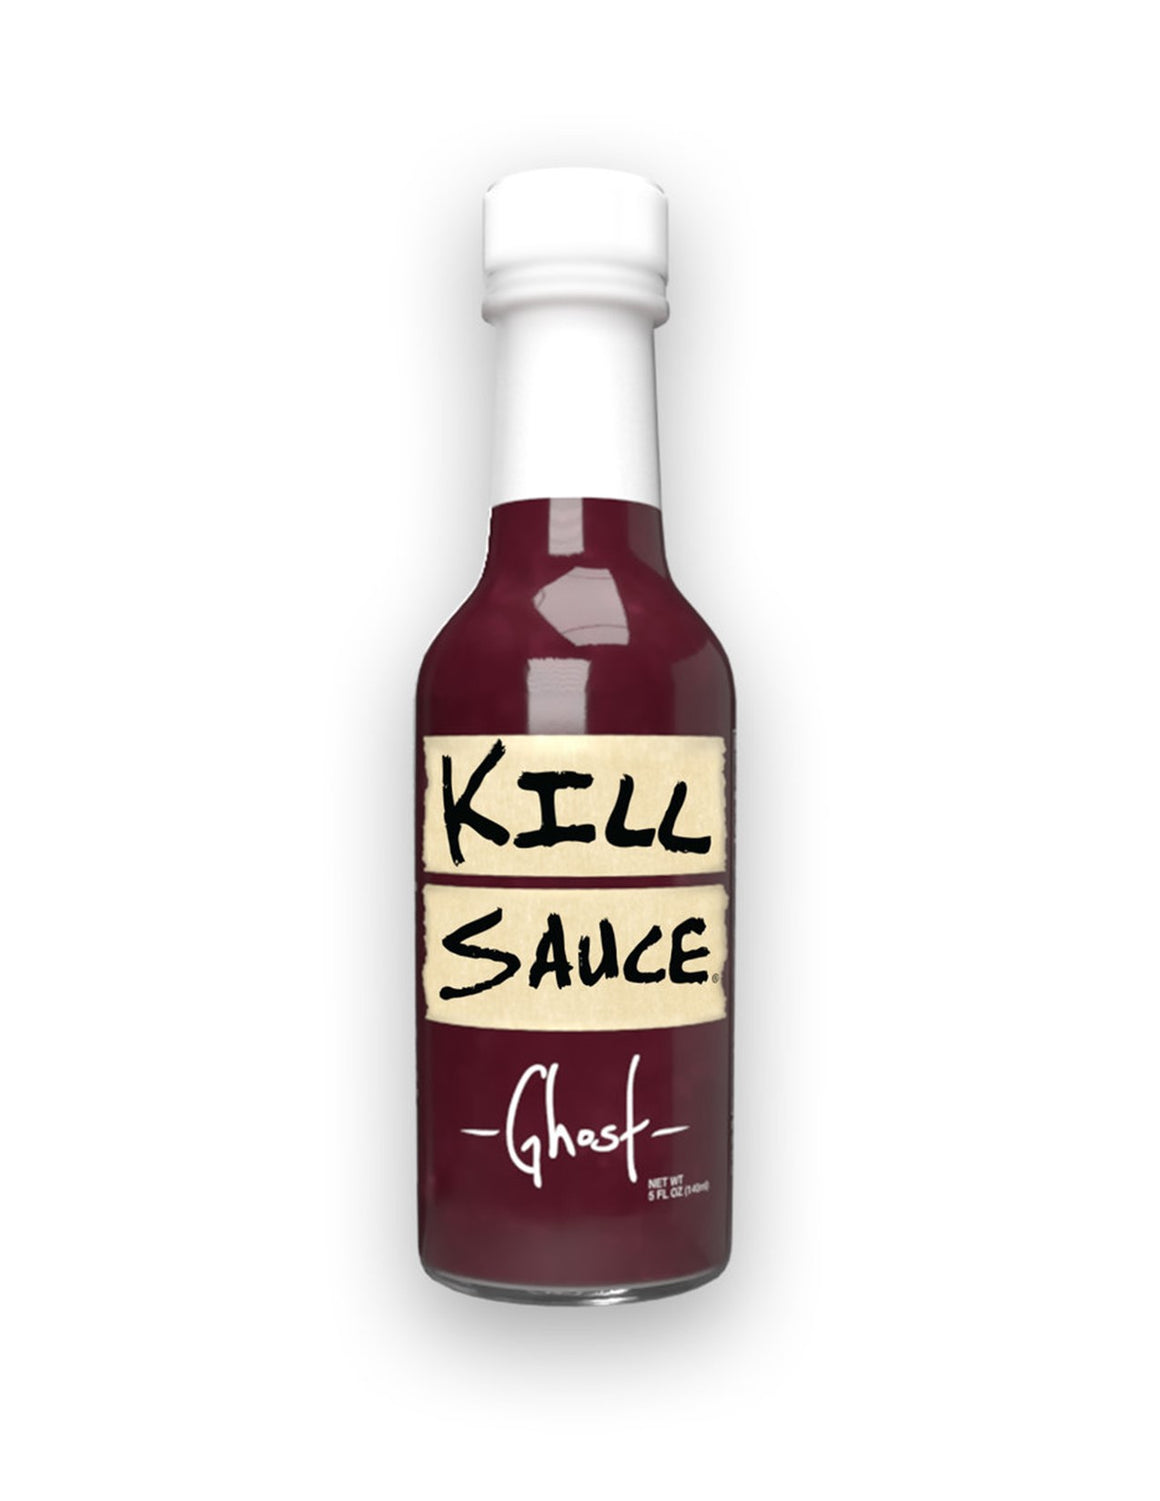 Kill Sauce - Ghost